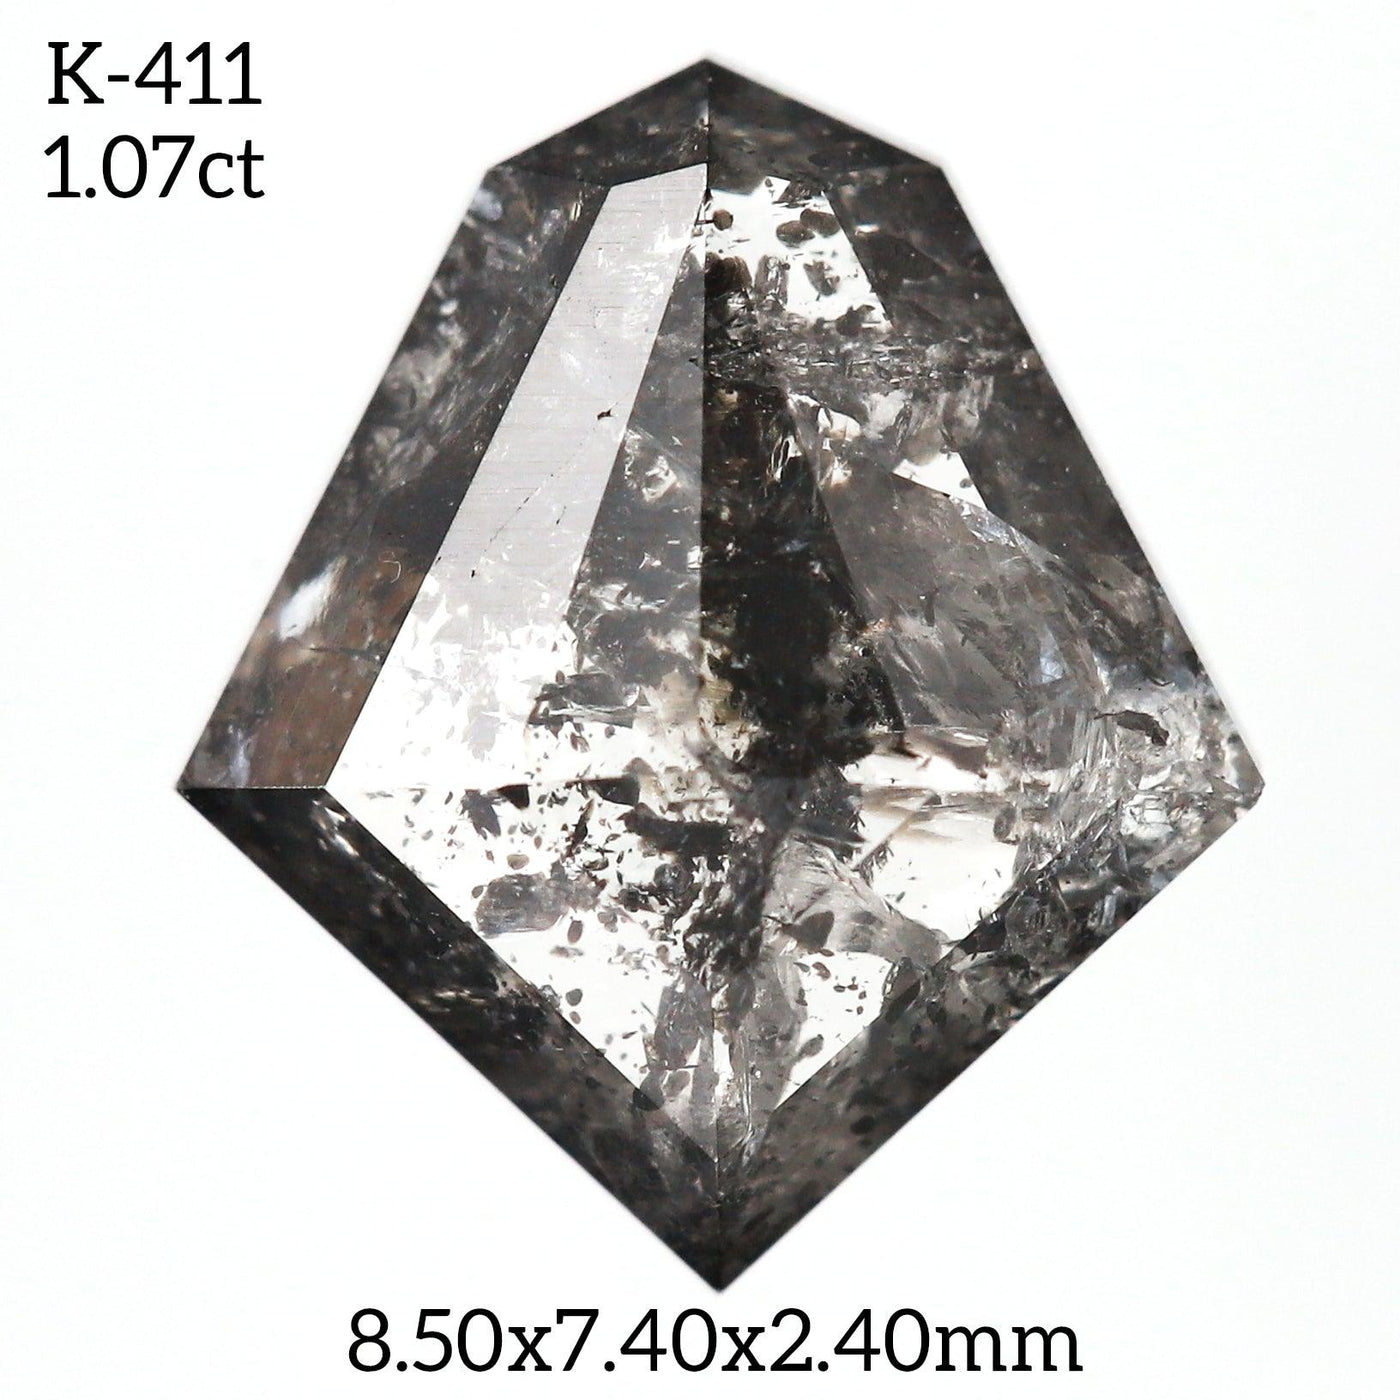 K411 - Salt and pepper kite diamond - Rubysta